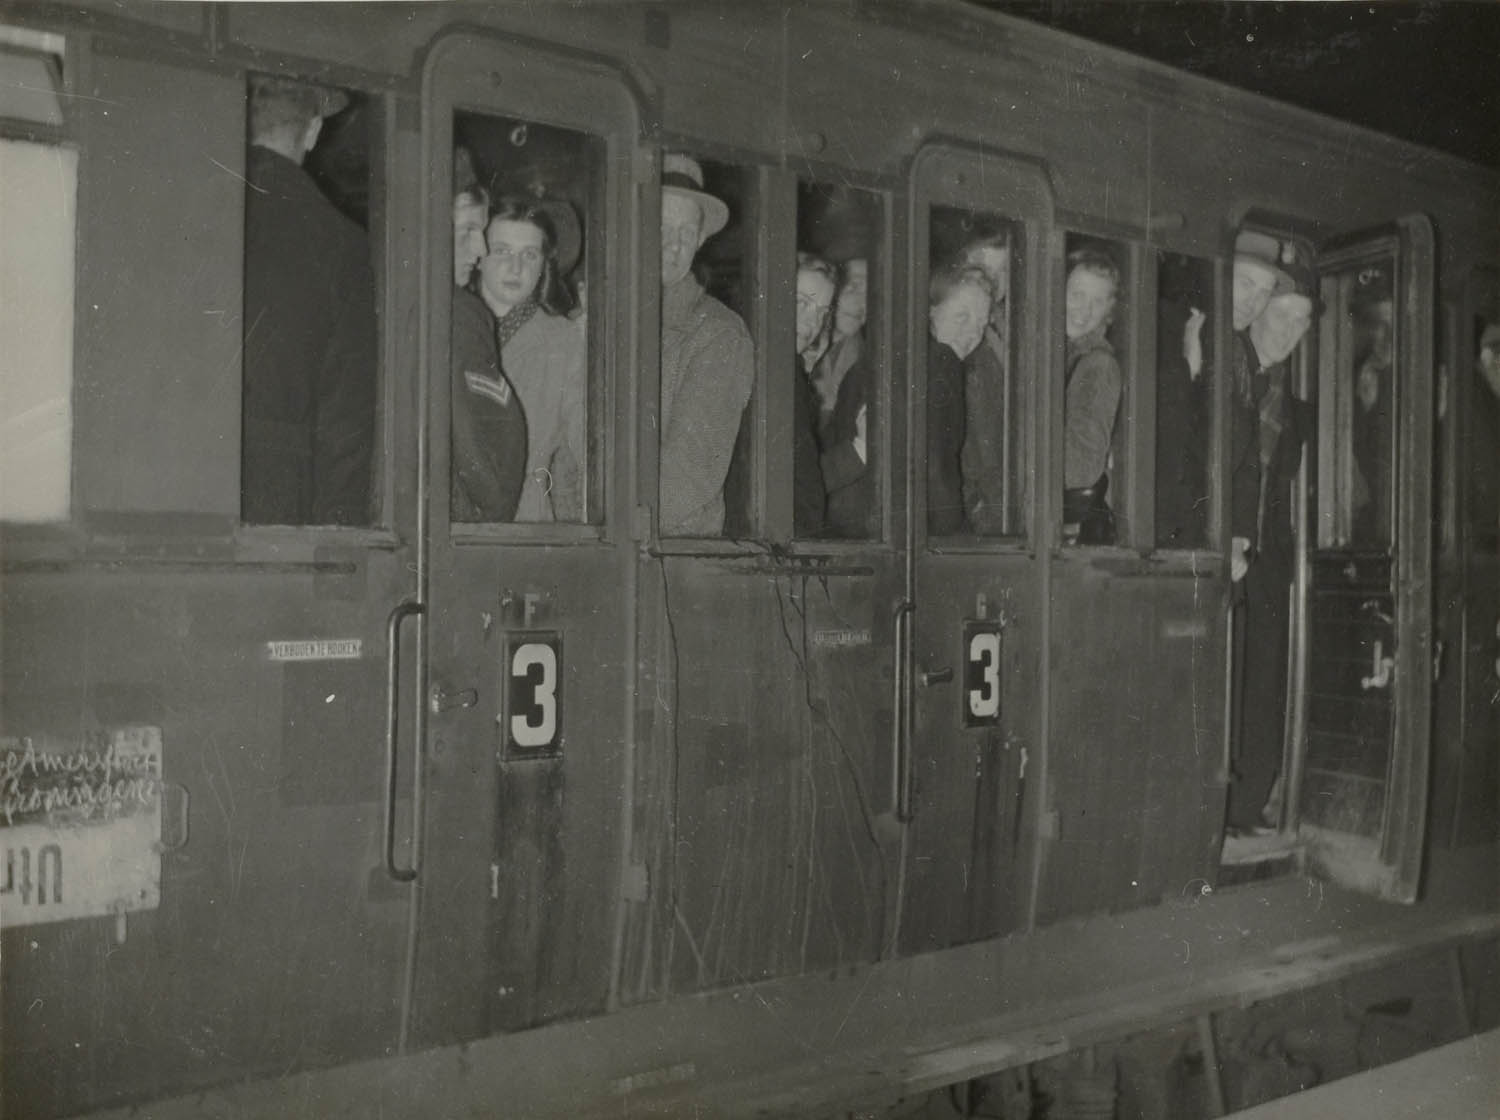 Stampvolle treinen direct na de bevrijding, 1945